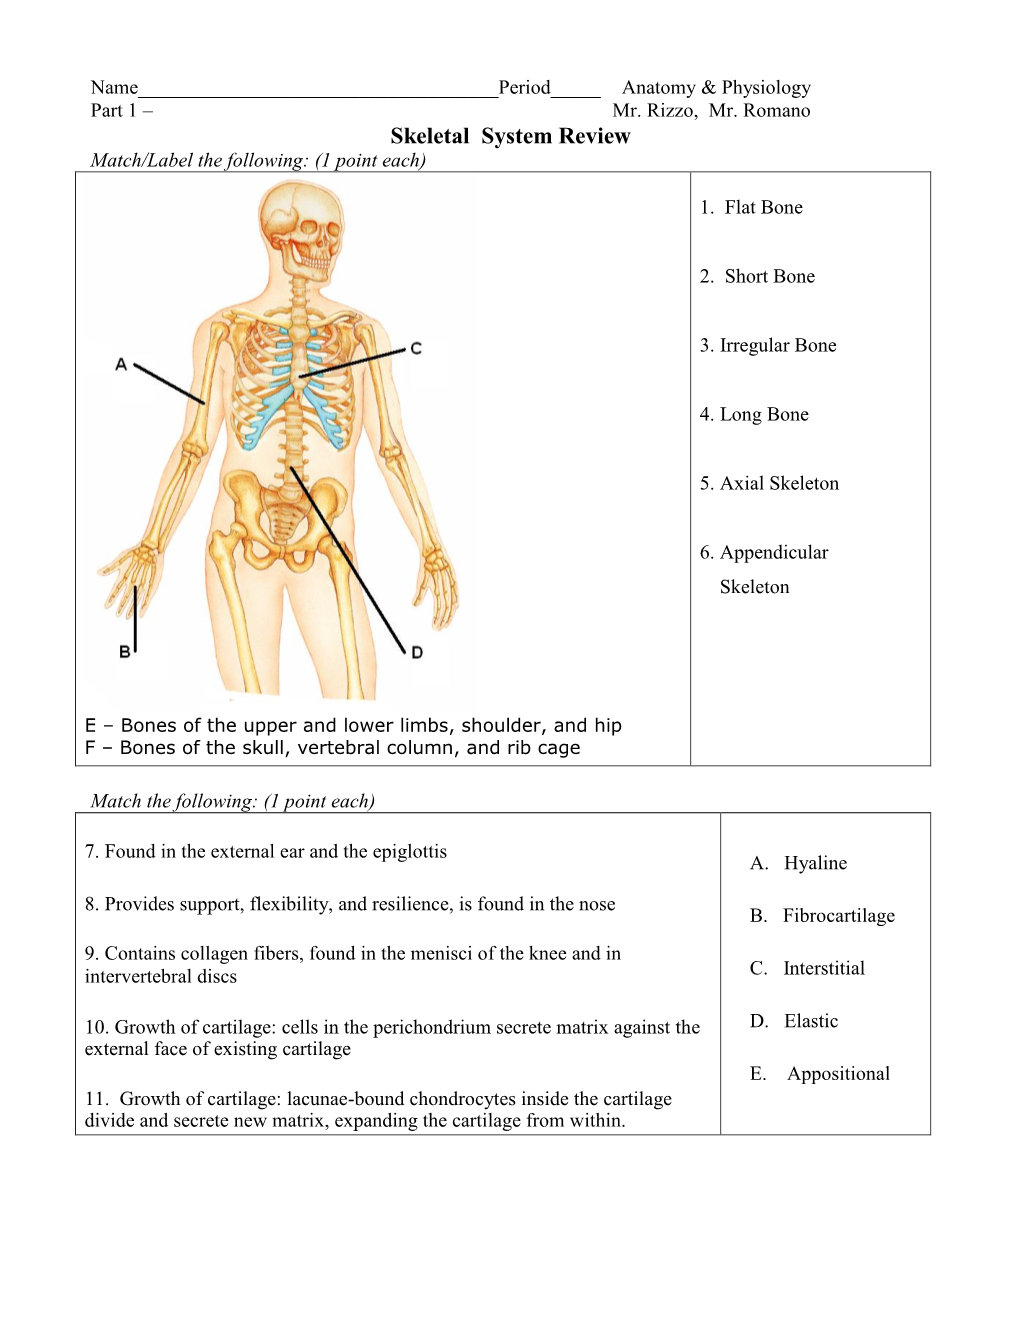 Anatomy, Skeletal System Review.Pdf